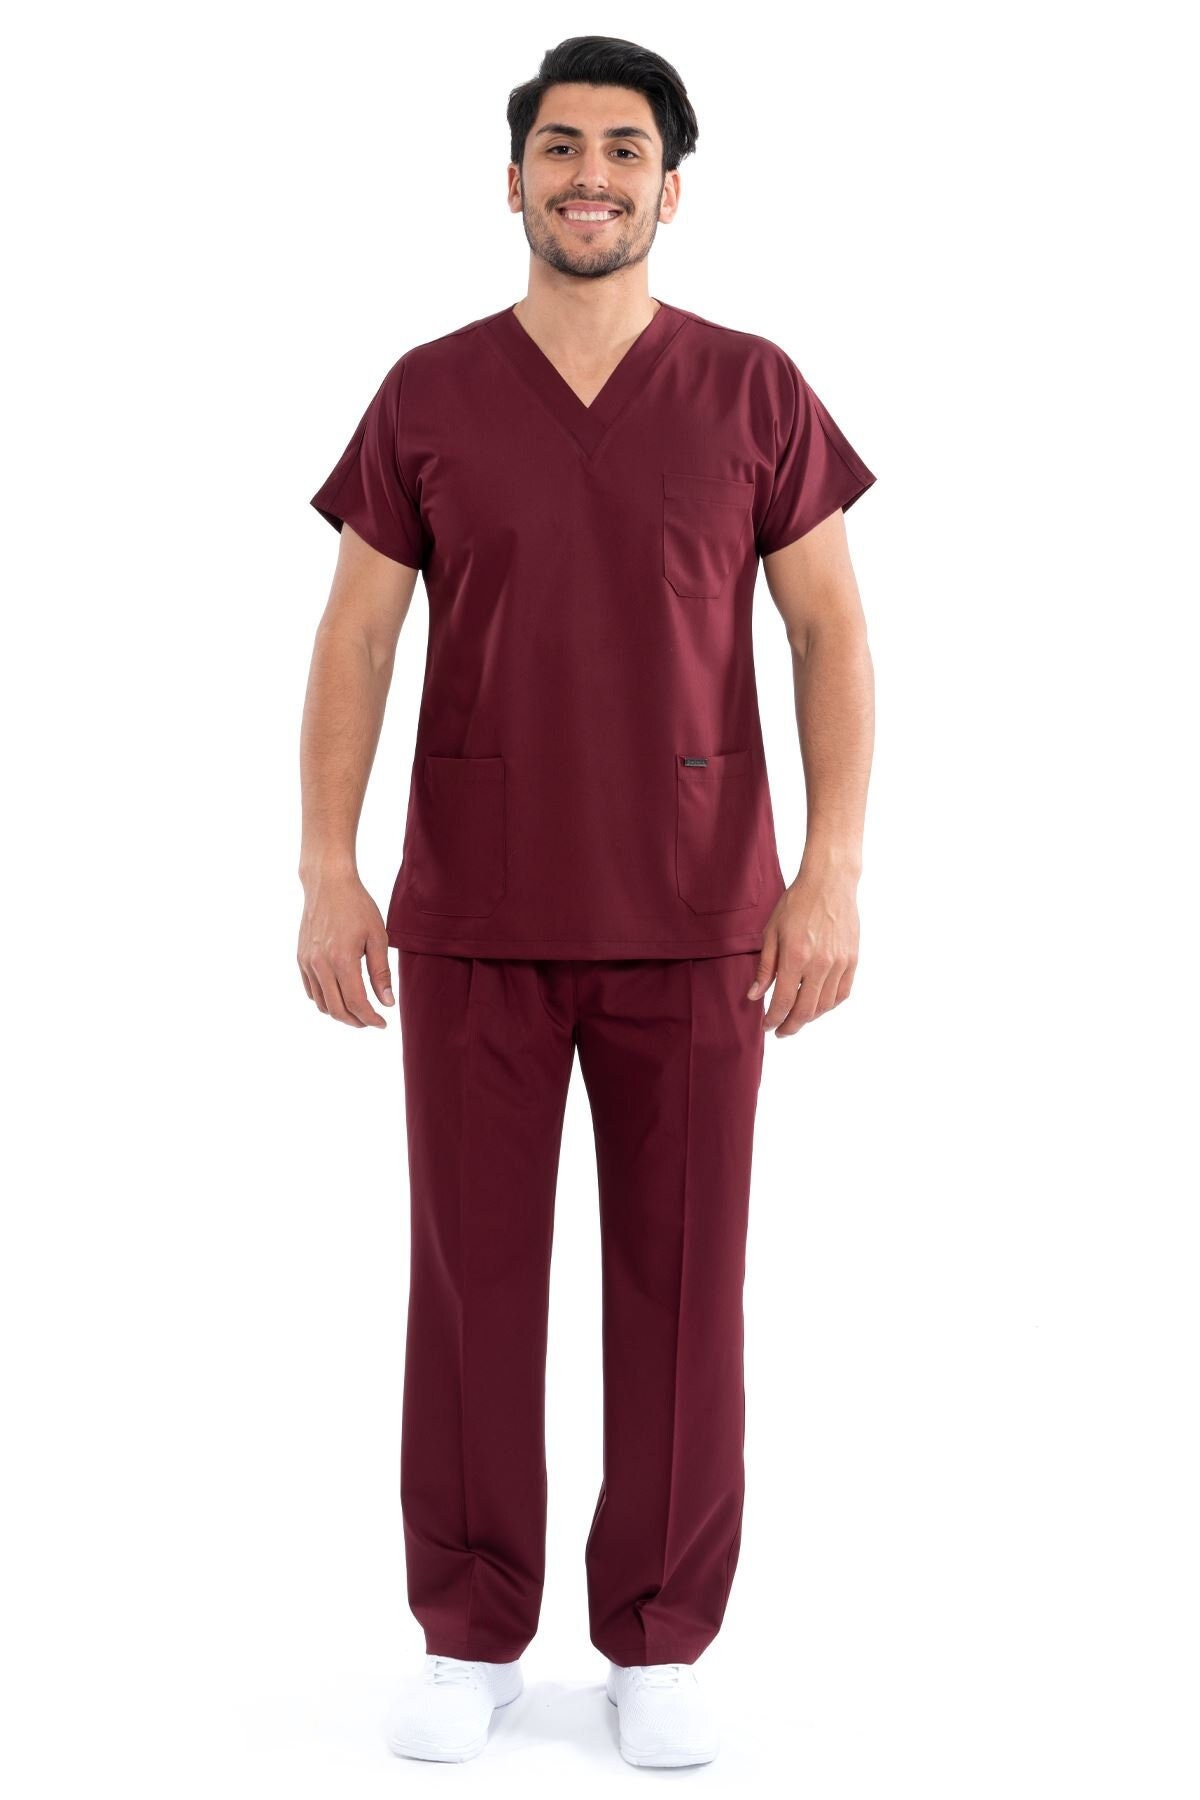 Men's Dark Burgundy Scrub Set, Easy Care Nurse Uniform, Custom